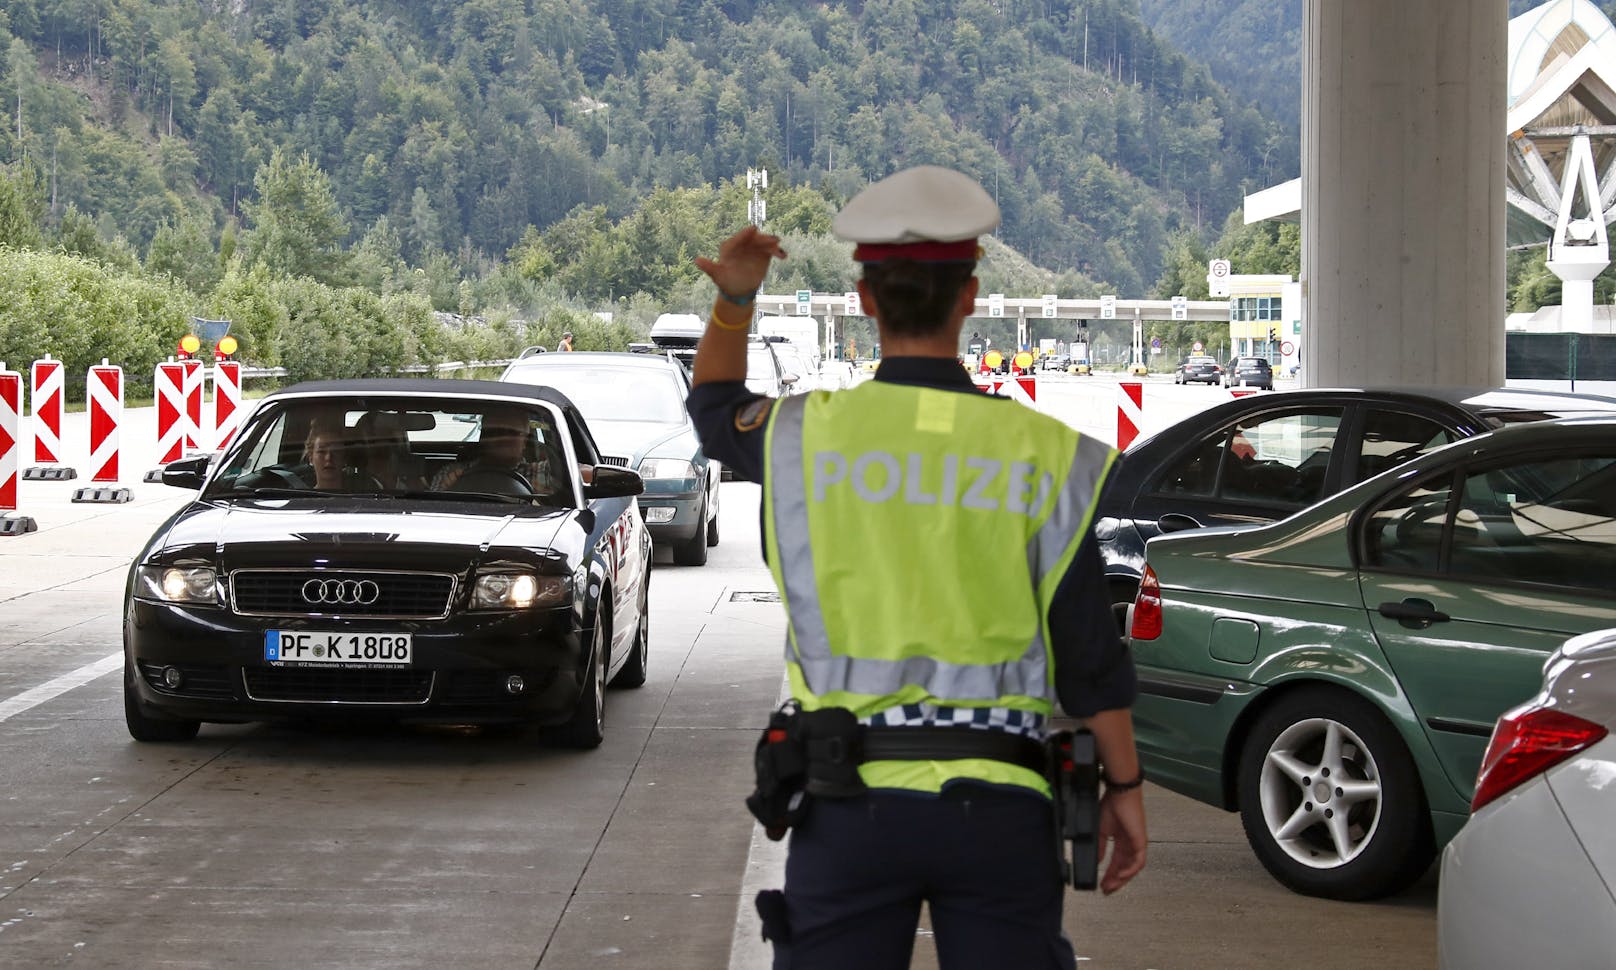 Kontrollen am Grenzübergang Karawankentunnel in Kärnten (16. August 2020)